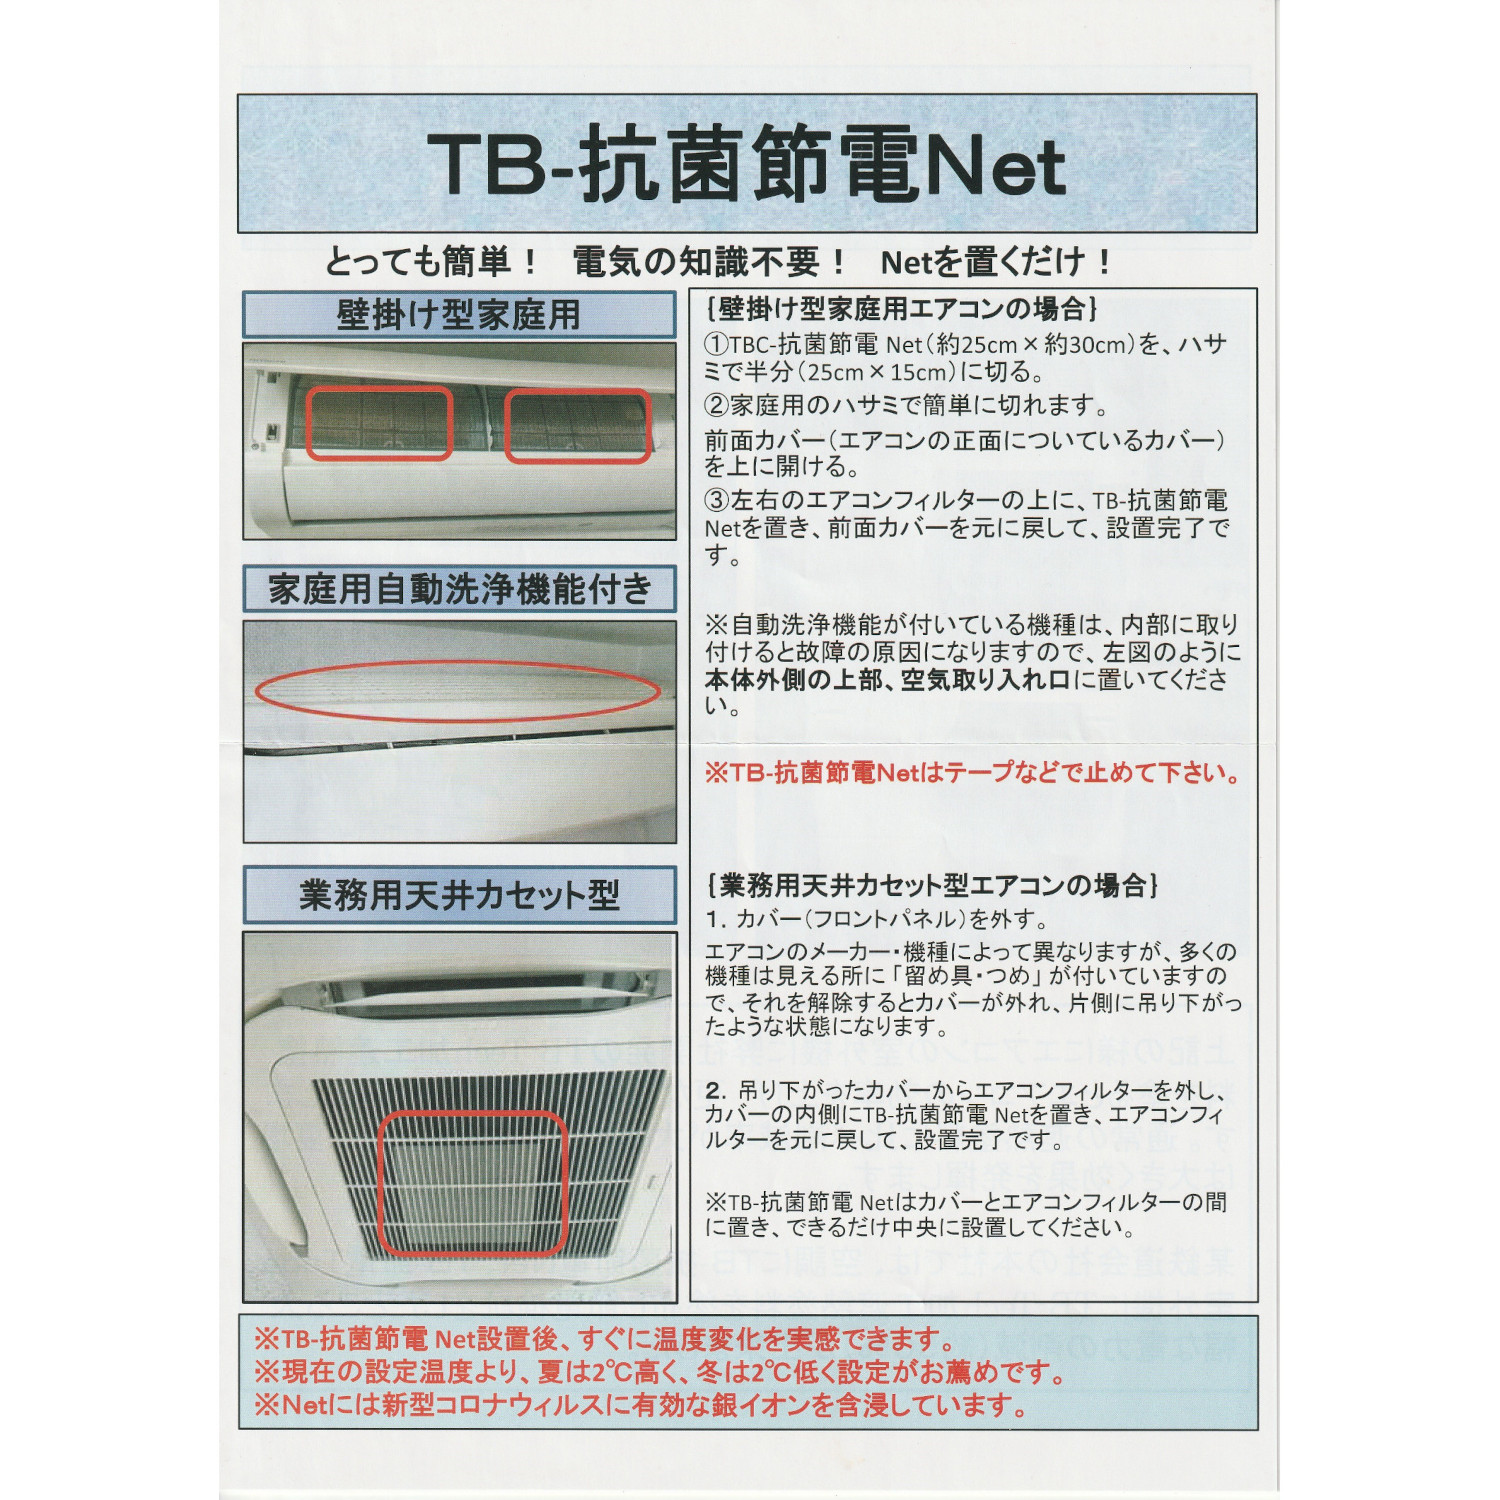 TB抗菌節電Net 取り付け方法